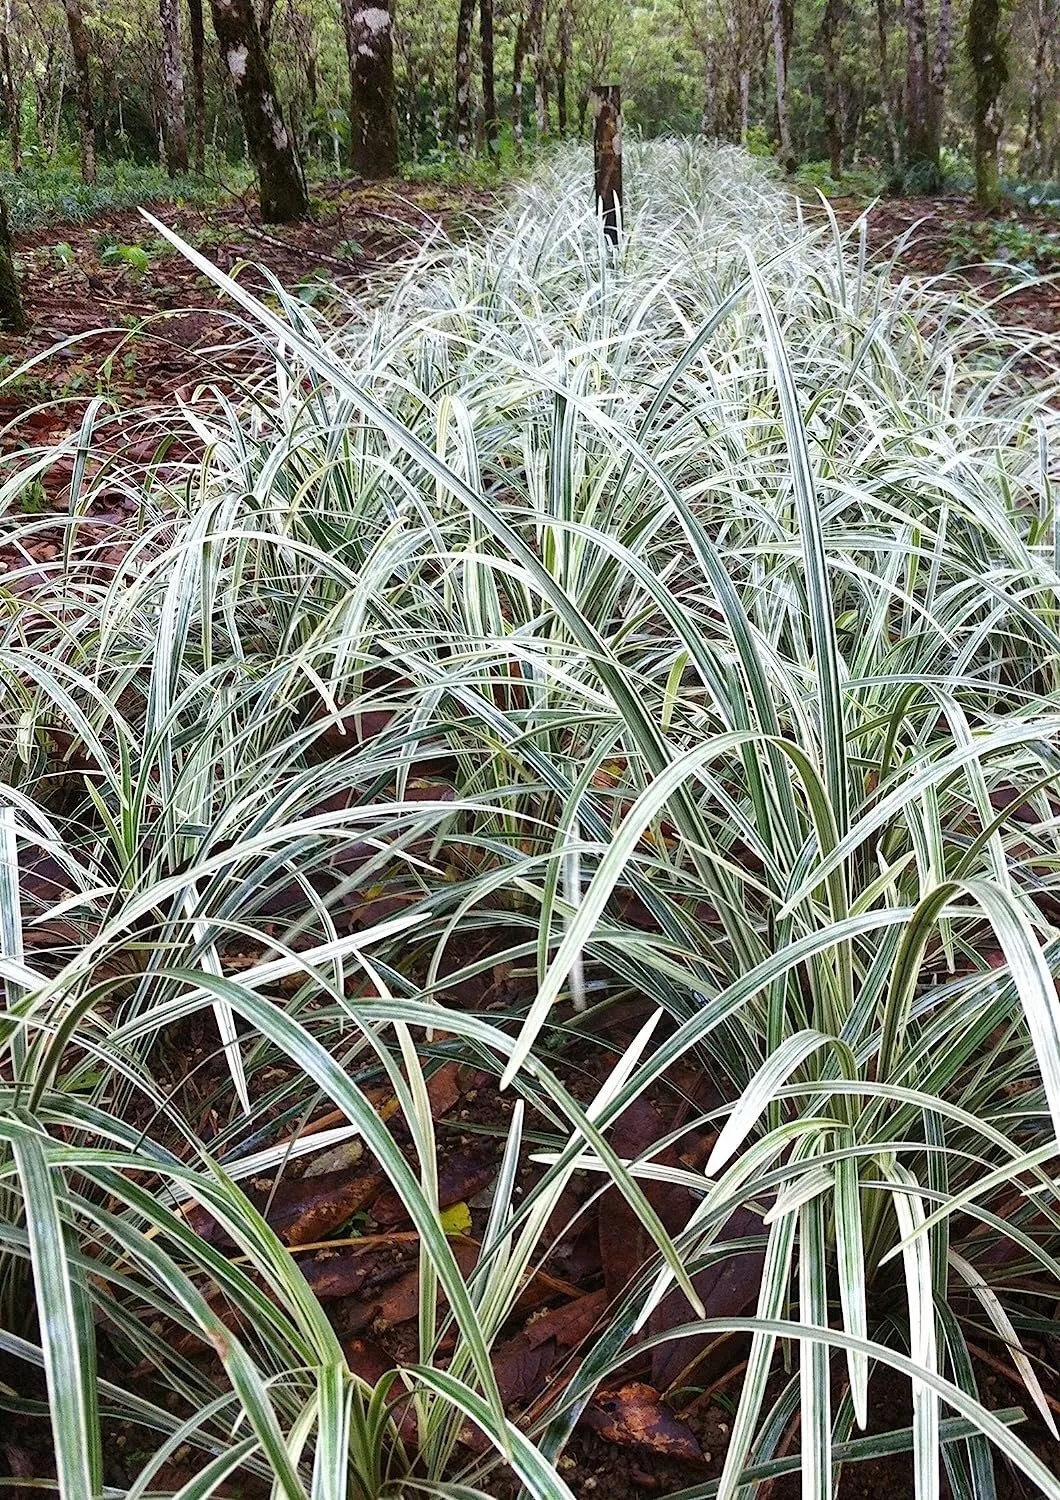 Aztec Grass 15 Live Plants Variegated Liriope Ophiopogon - $92.32